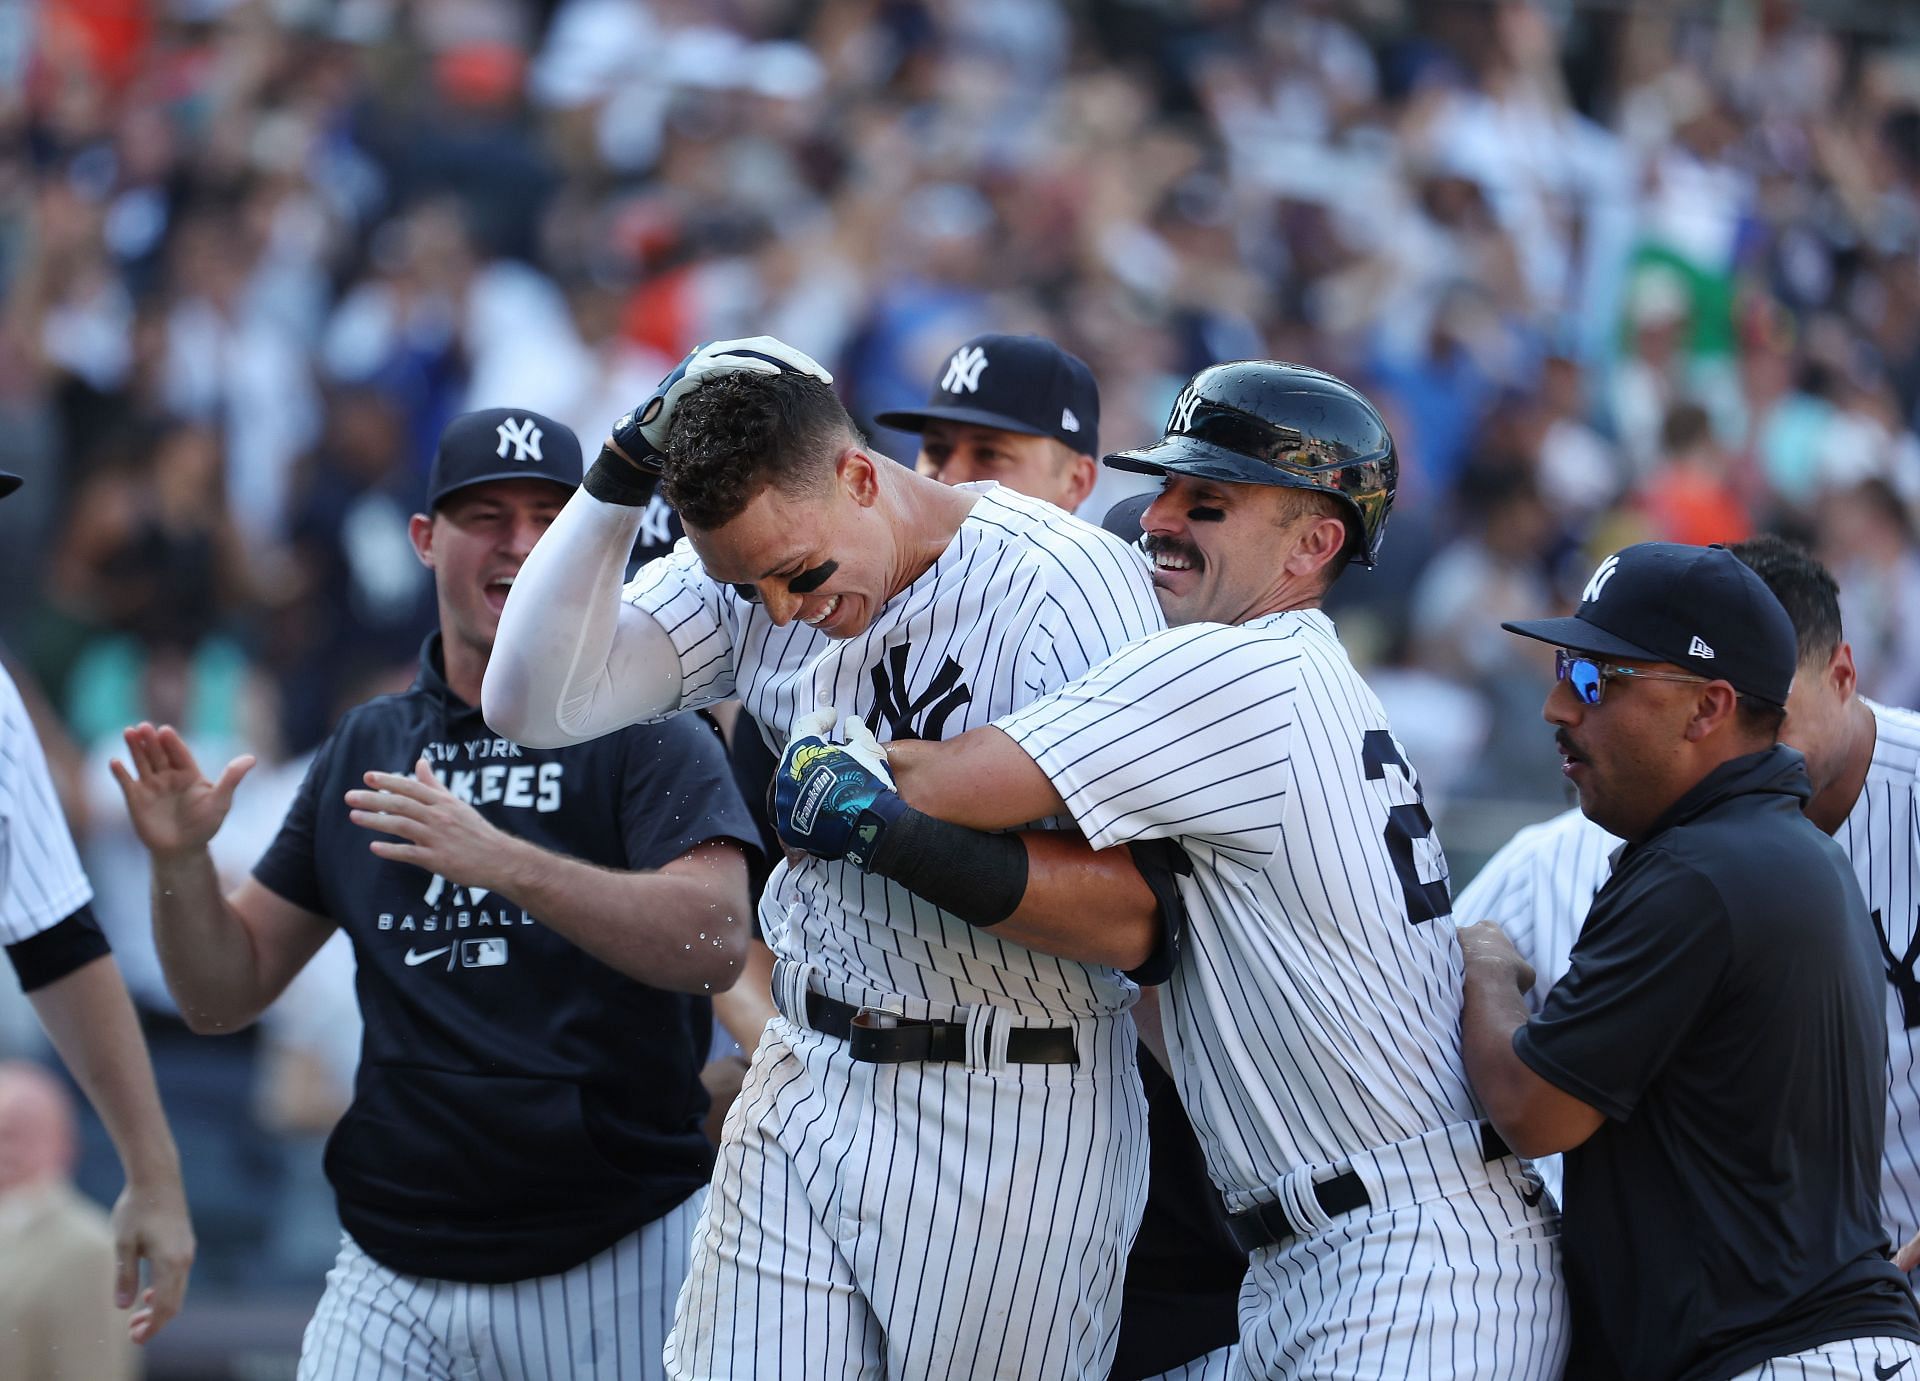 Derek Jeter Wins His Last Yankees Home Game With Walk-Off Hit